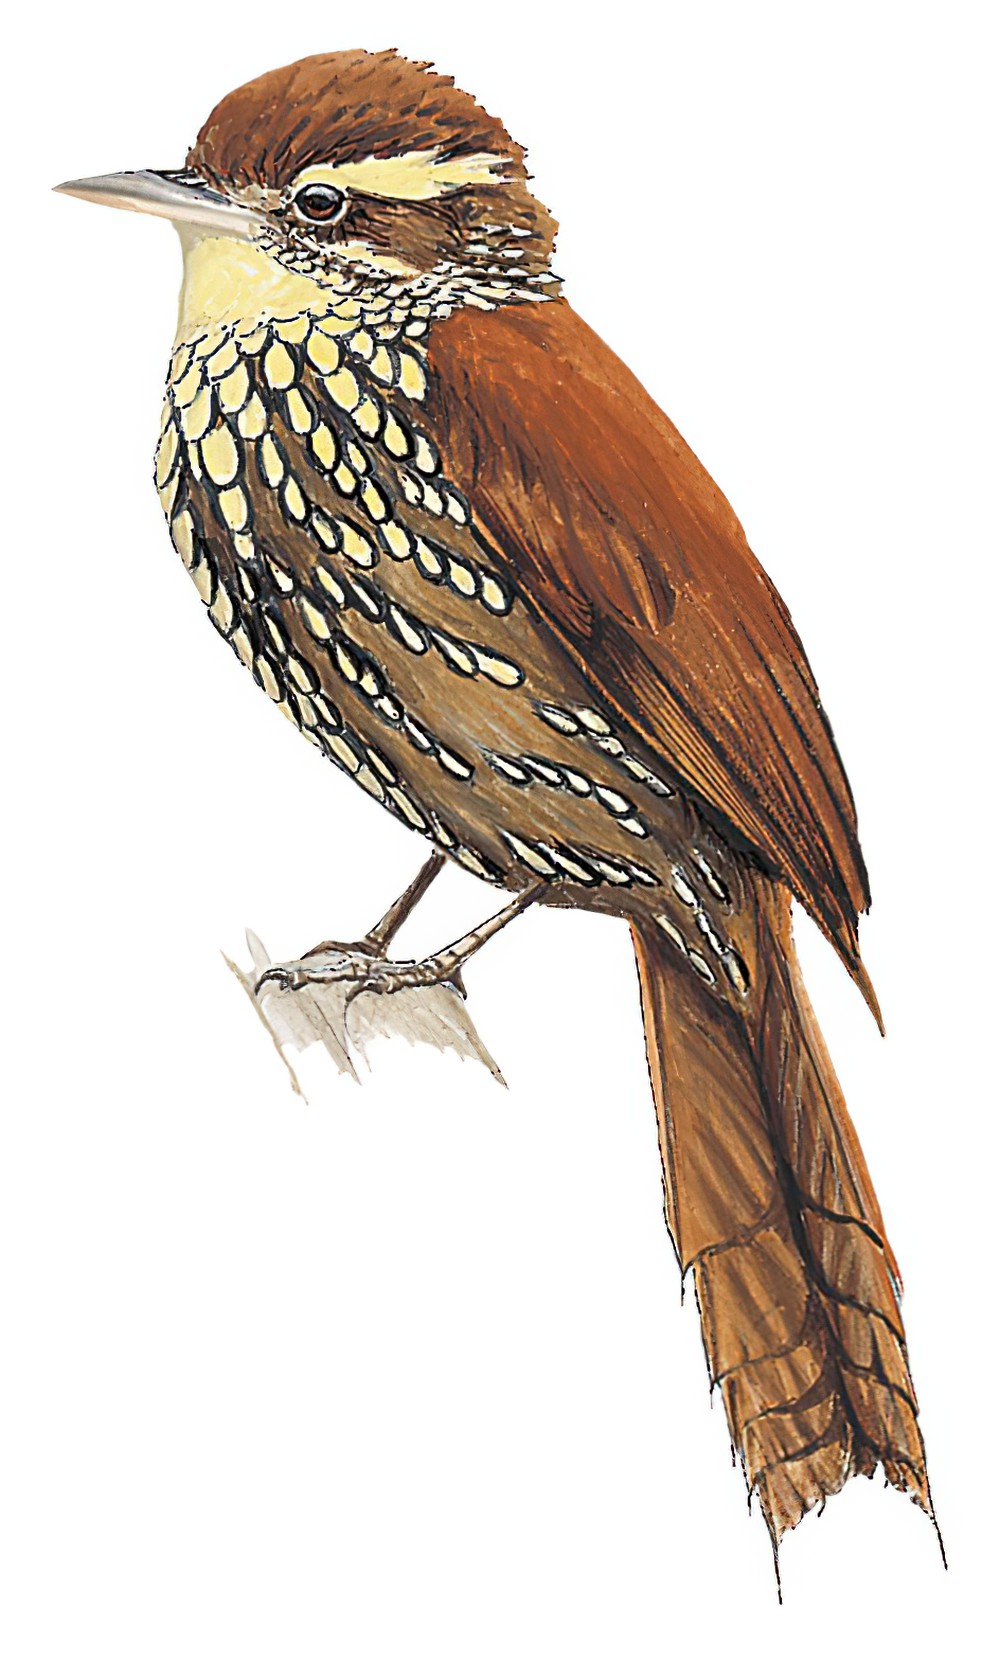 Pearled Treerunner / Margarornis squamiger